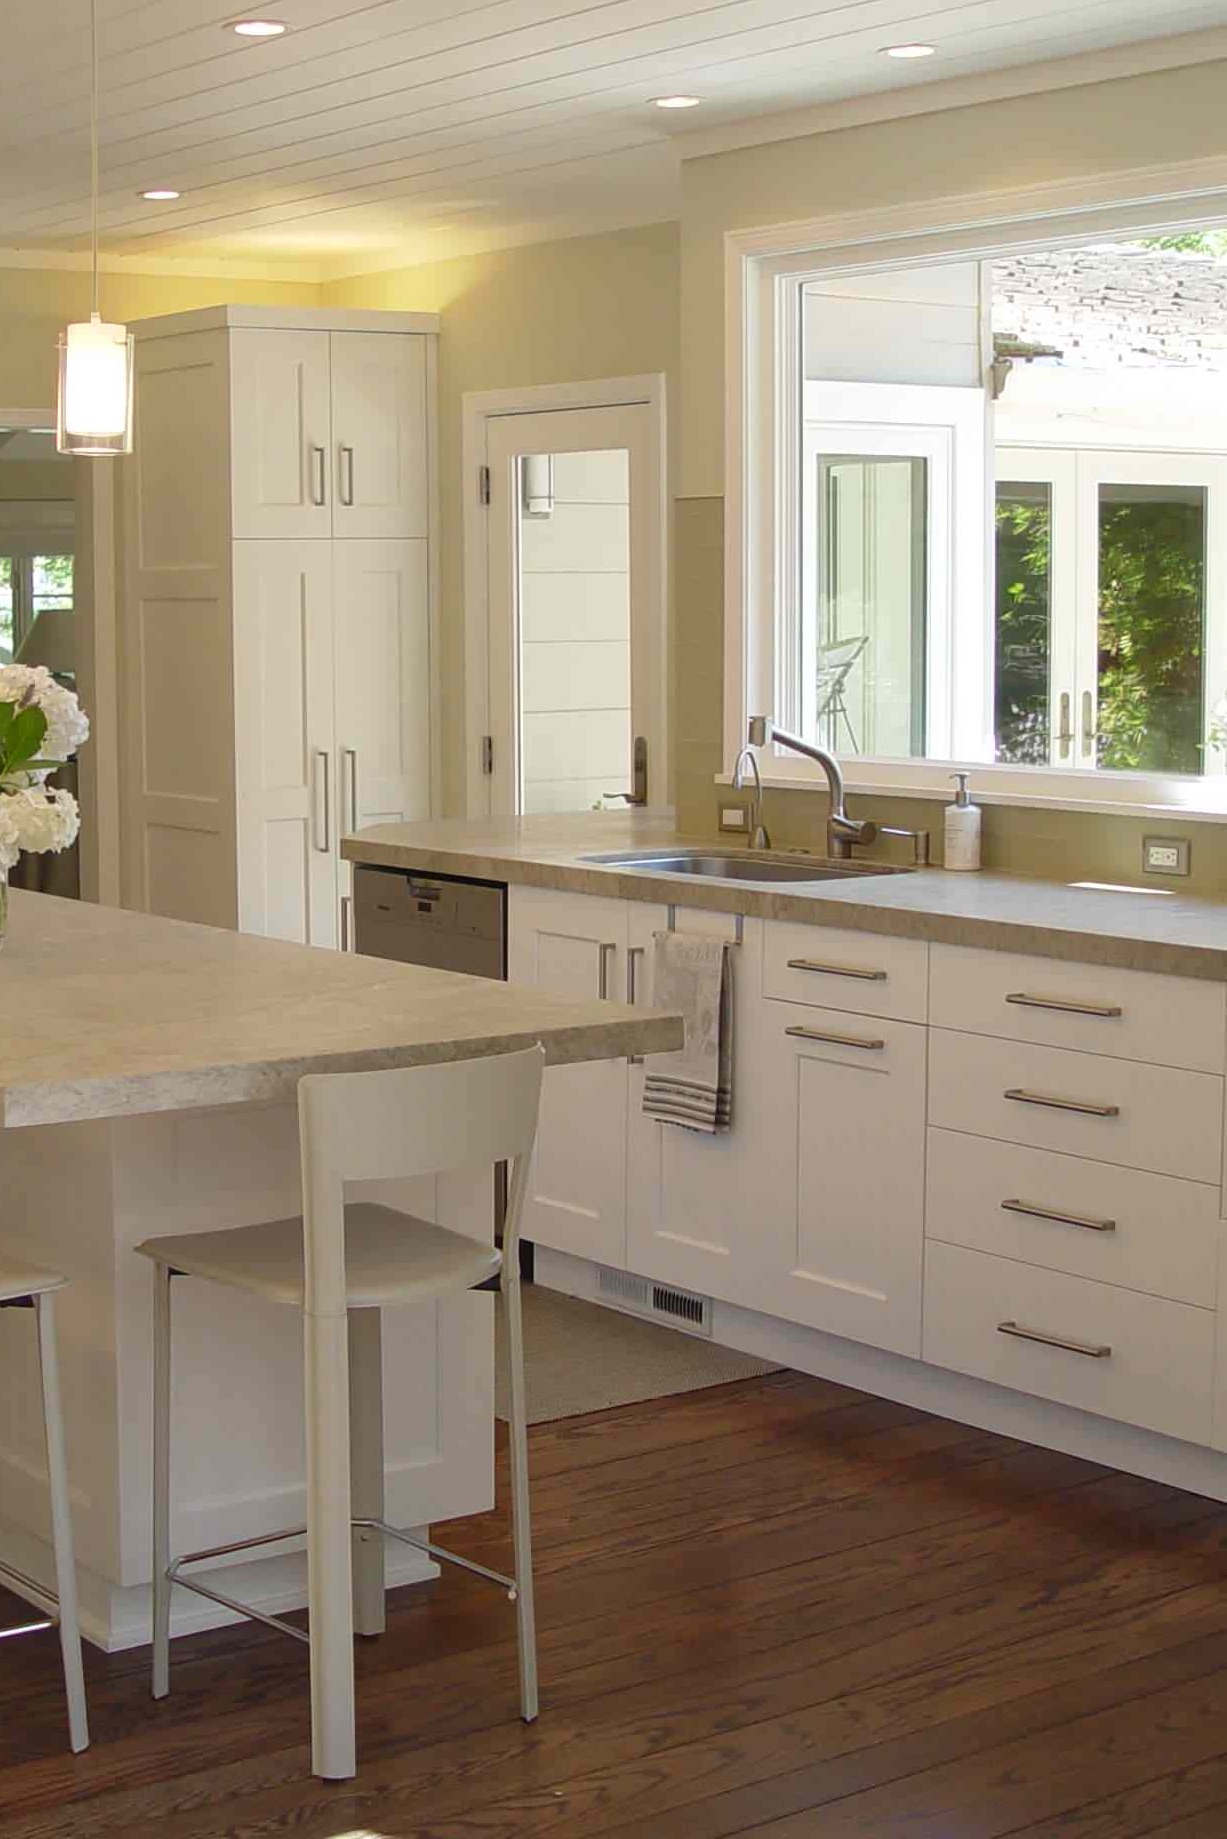 Mother Of Pearl Quartzite Countertops White Cabinets Dark Hardwood Floor Glass Backsplash